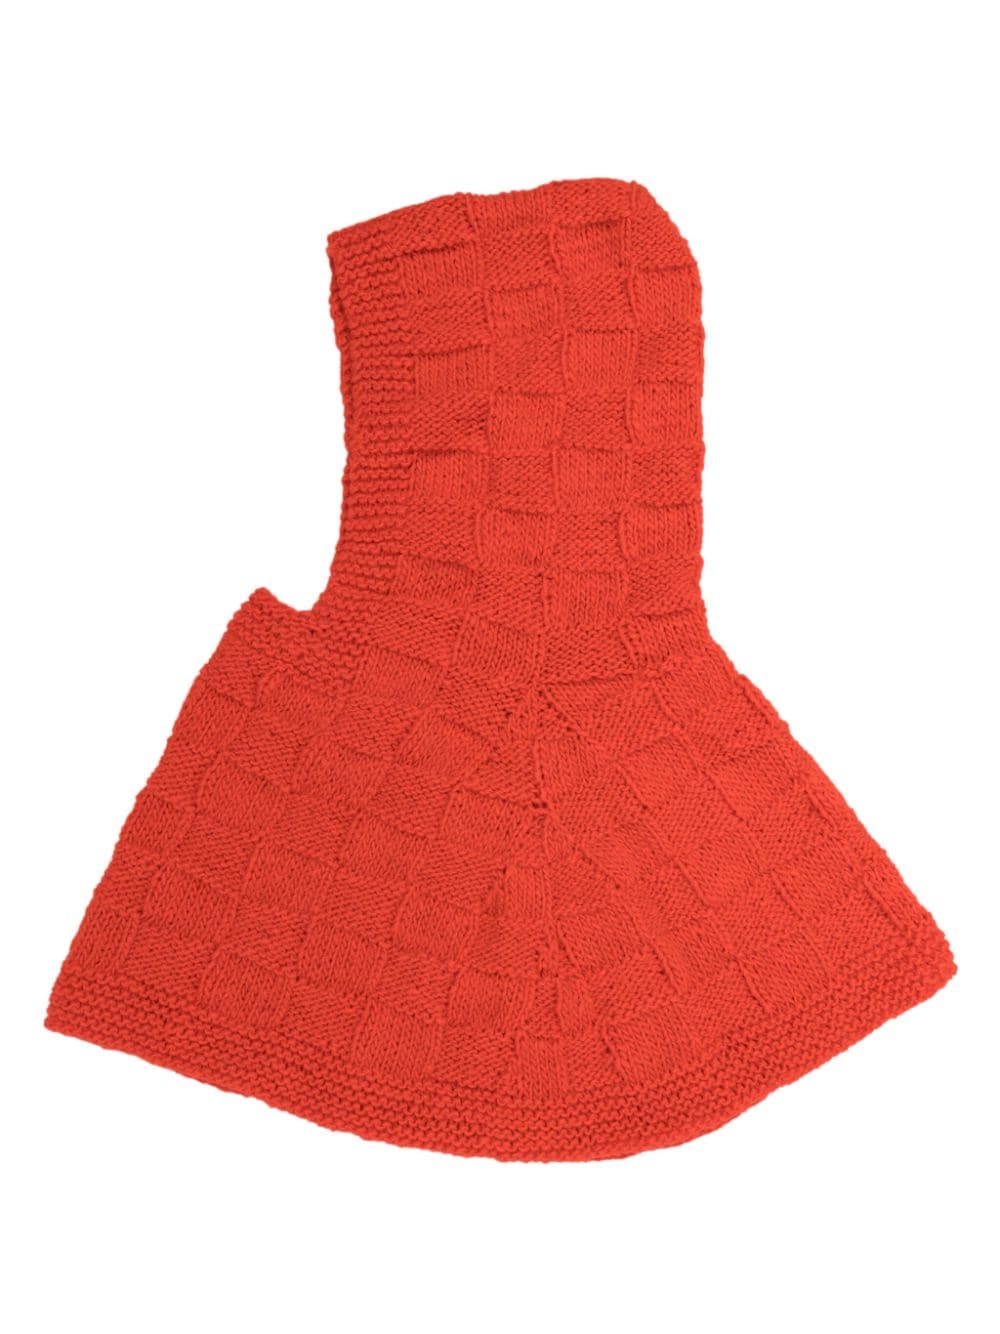 Kiko Kostadinov crochet-knit virgin wool blend balaclava - Red von Kiko Kostadinov